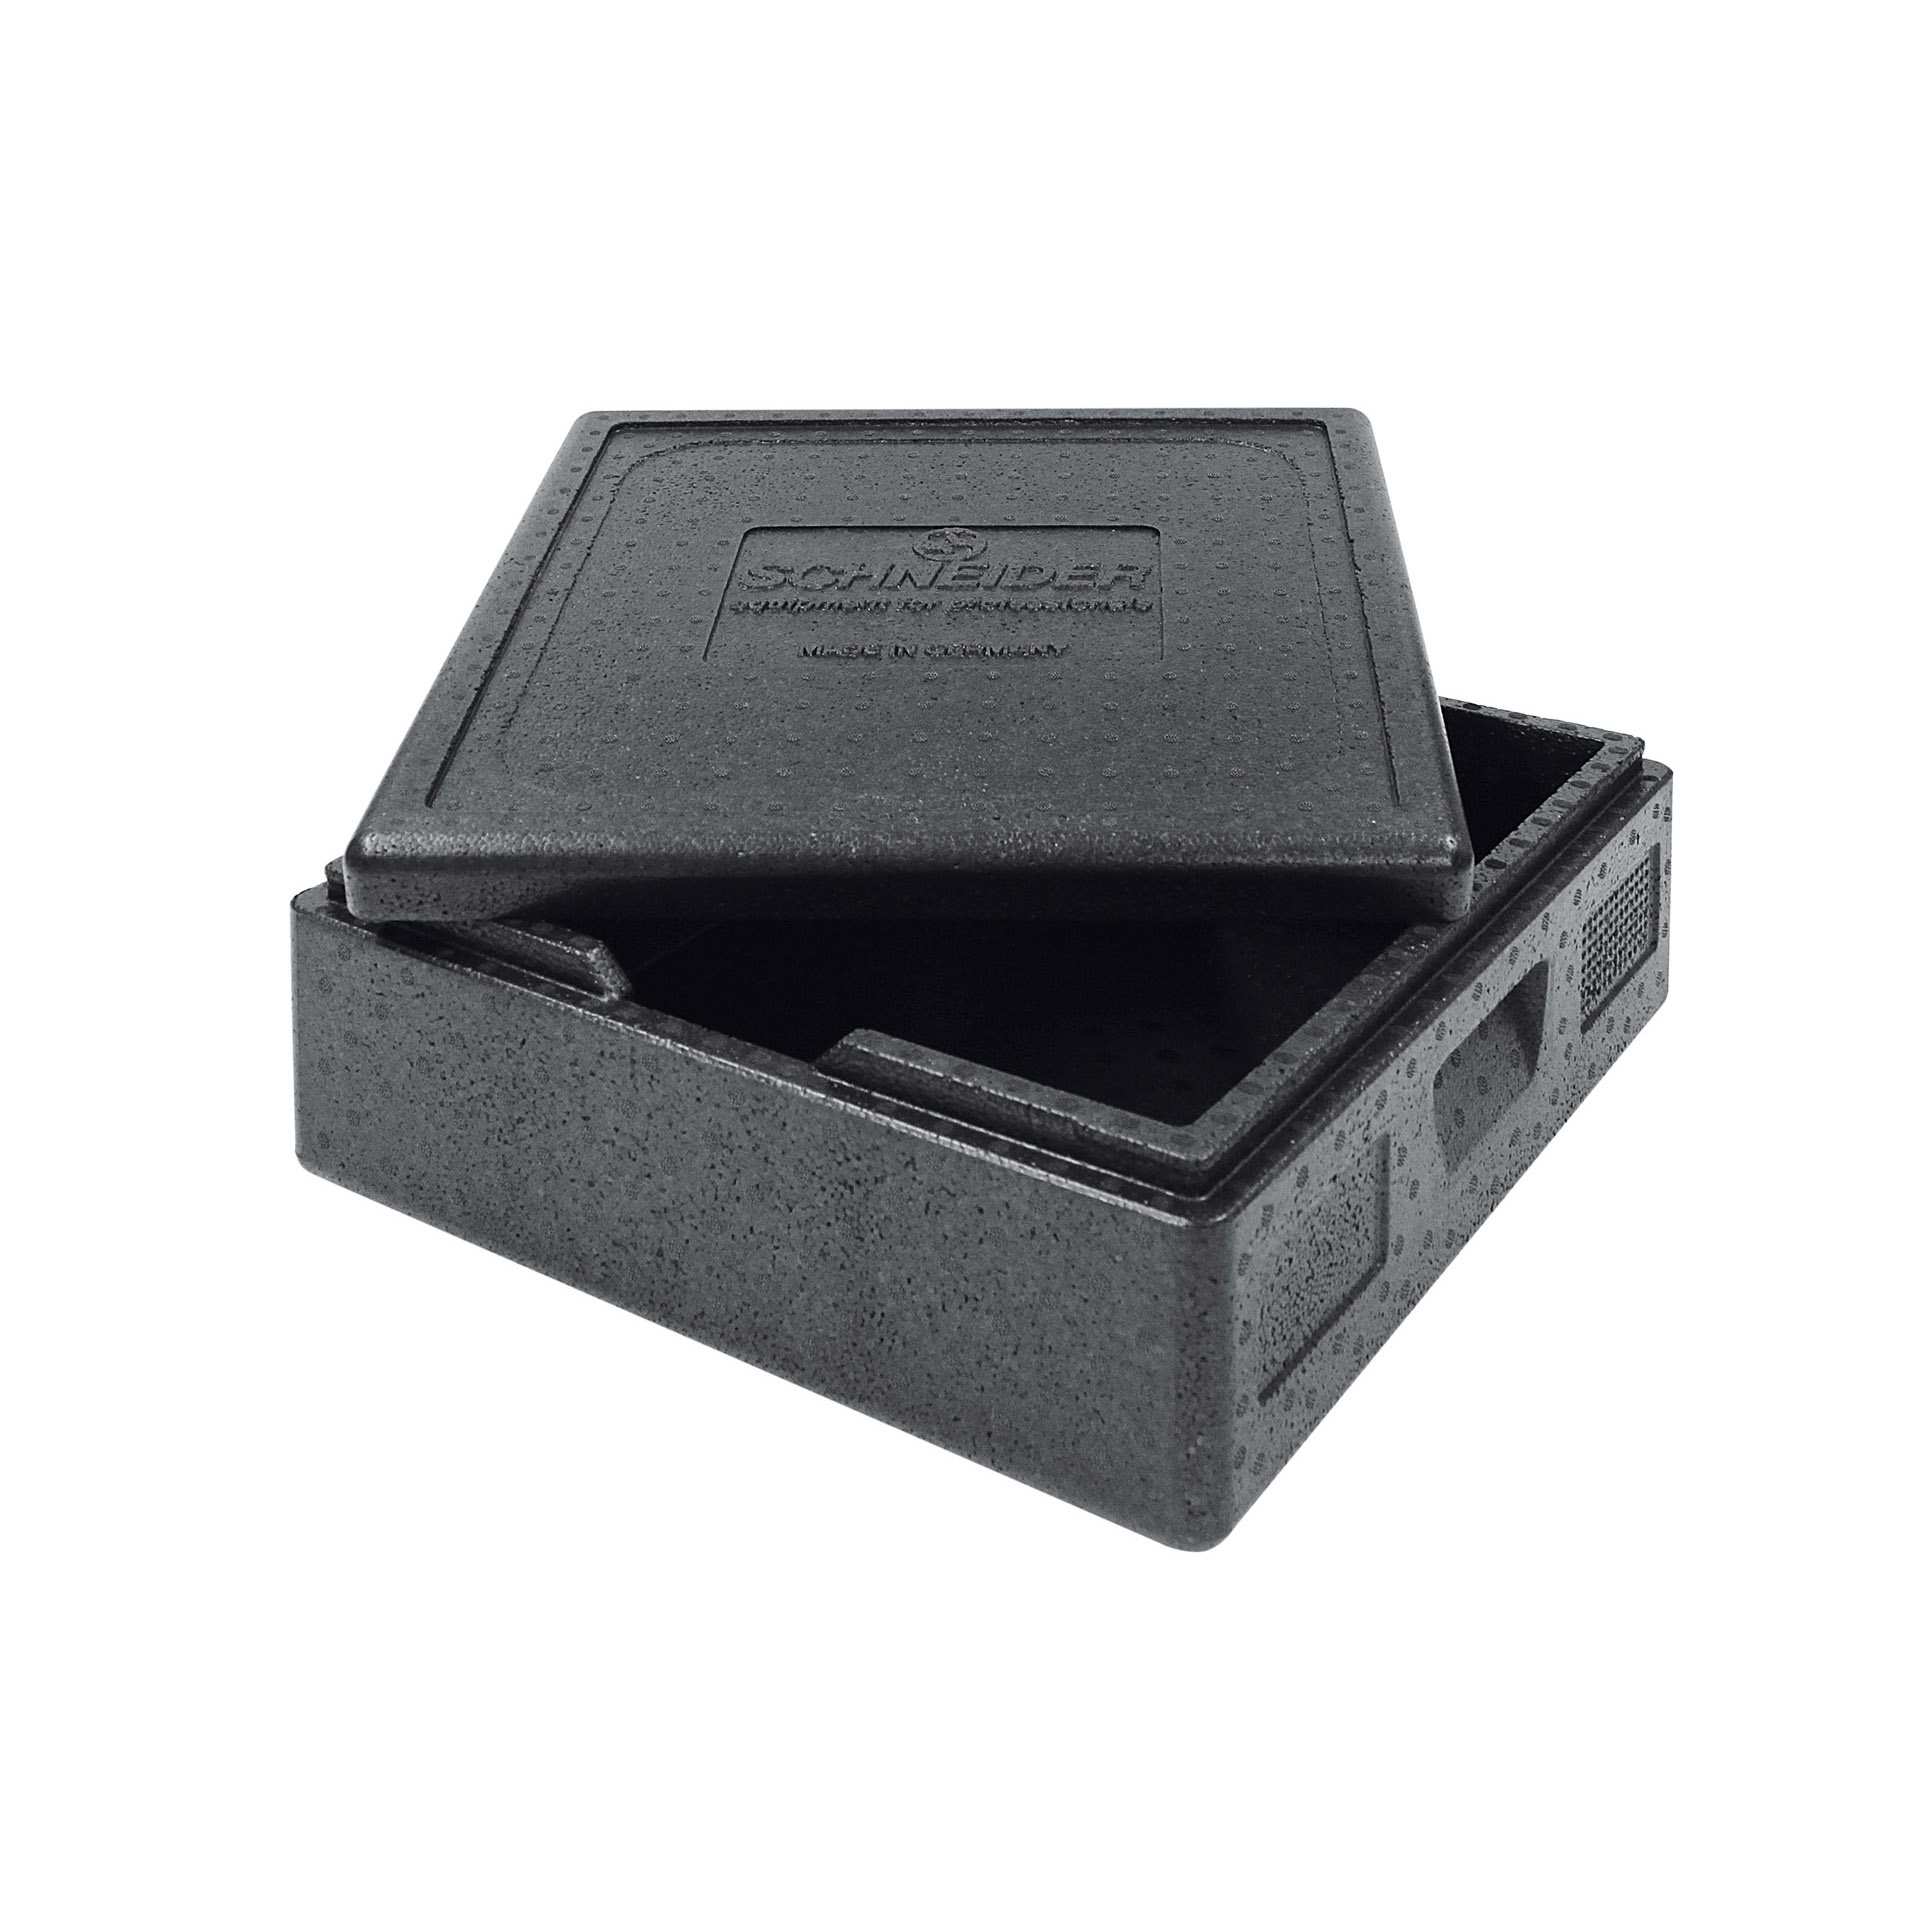 TOP-BOX - Pizza groß - Abm. 48,0 x 48,0 x 18,0 cm - Inhalt 21 l - EPP - 651165-C